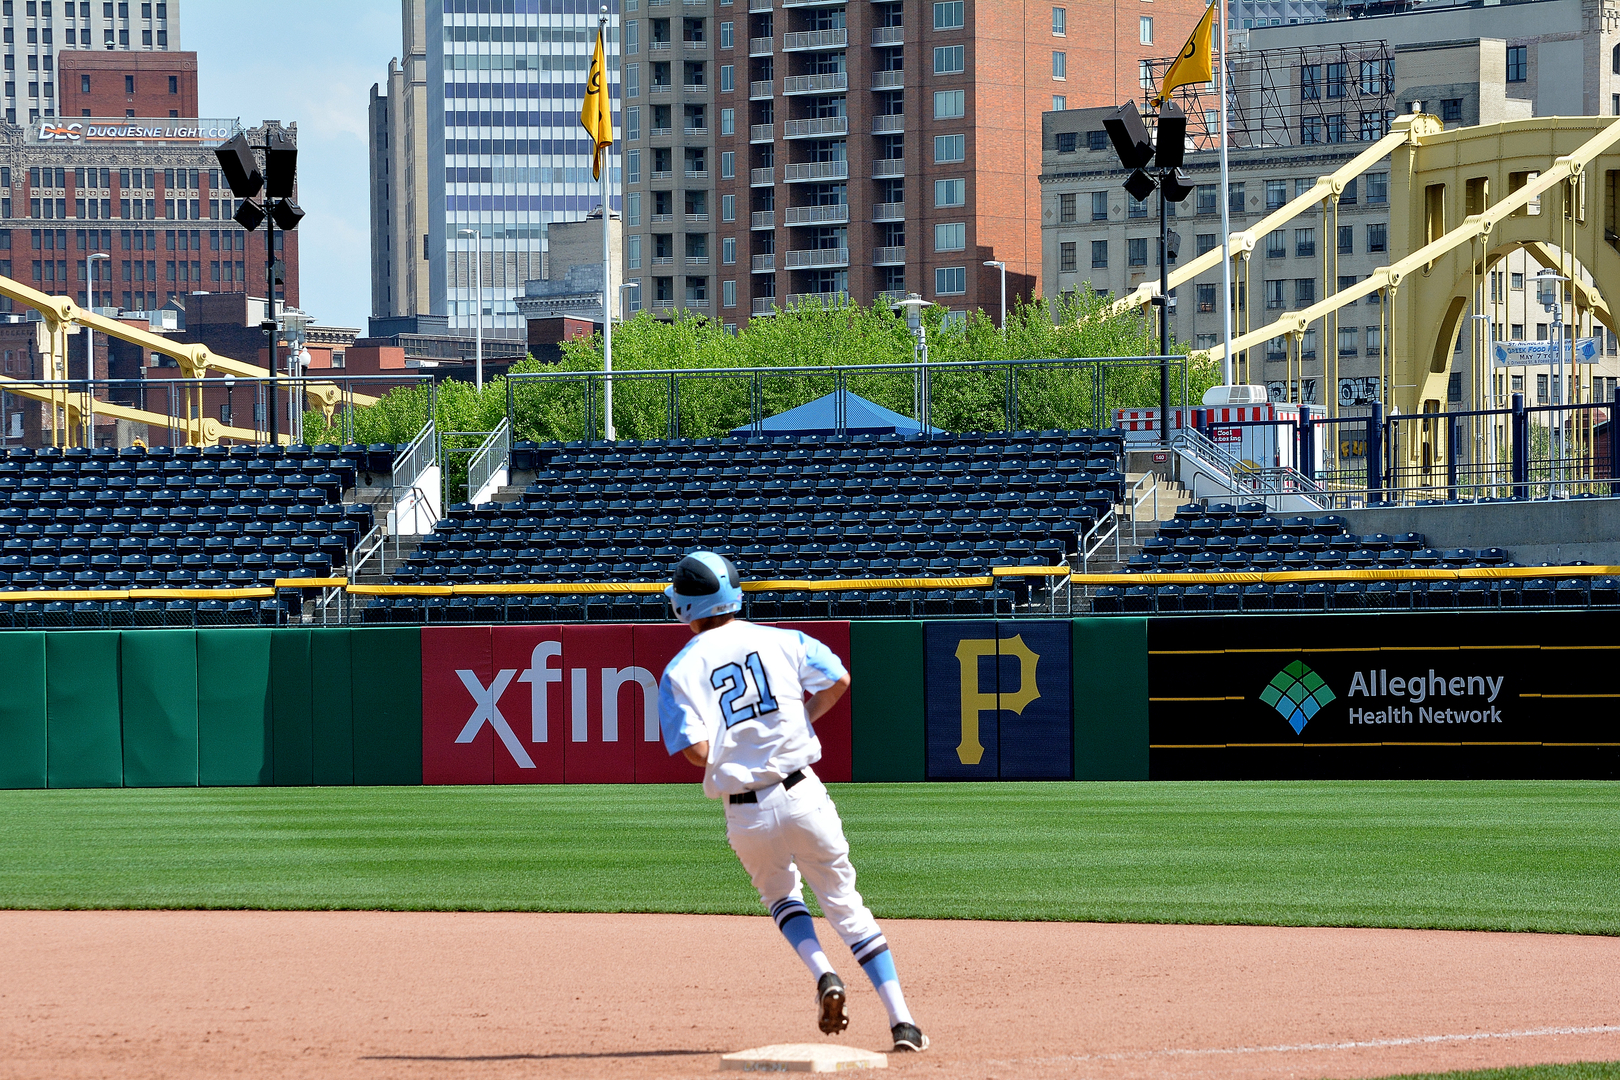 PNC Park Baseball – Unforgettaballs®